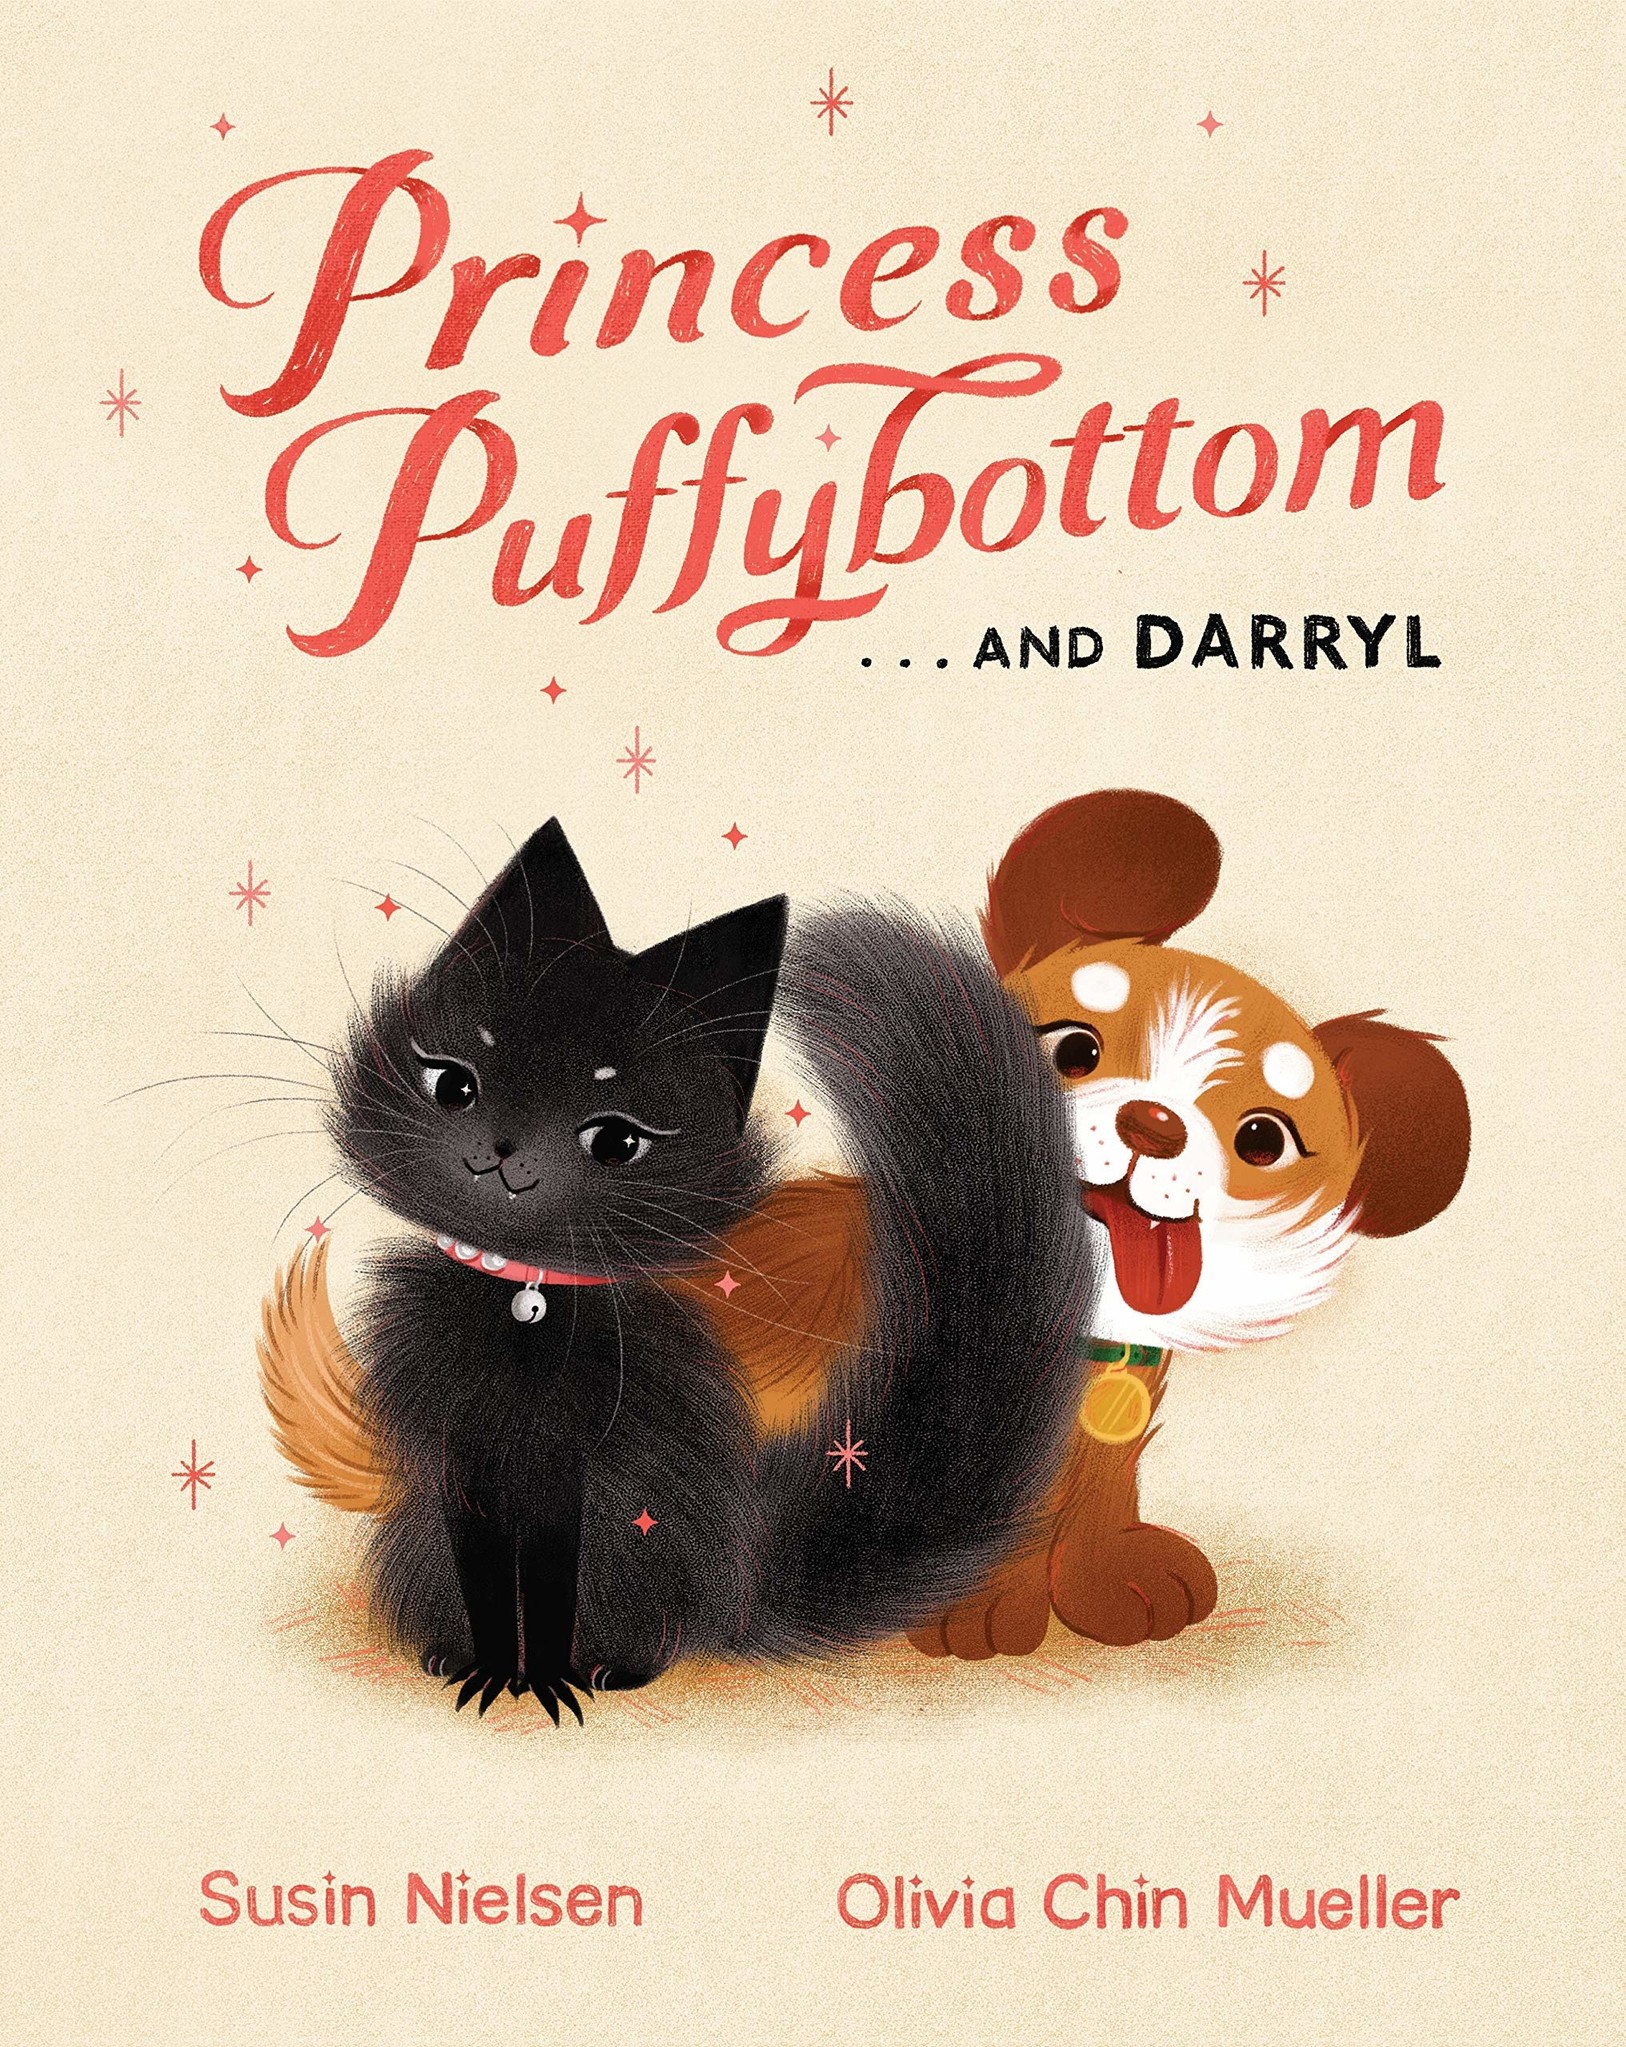 Princess Puffybottom And Darryl